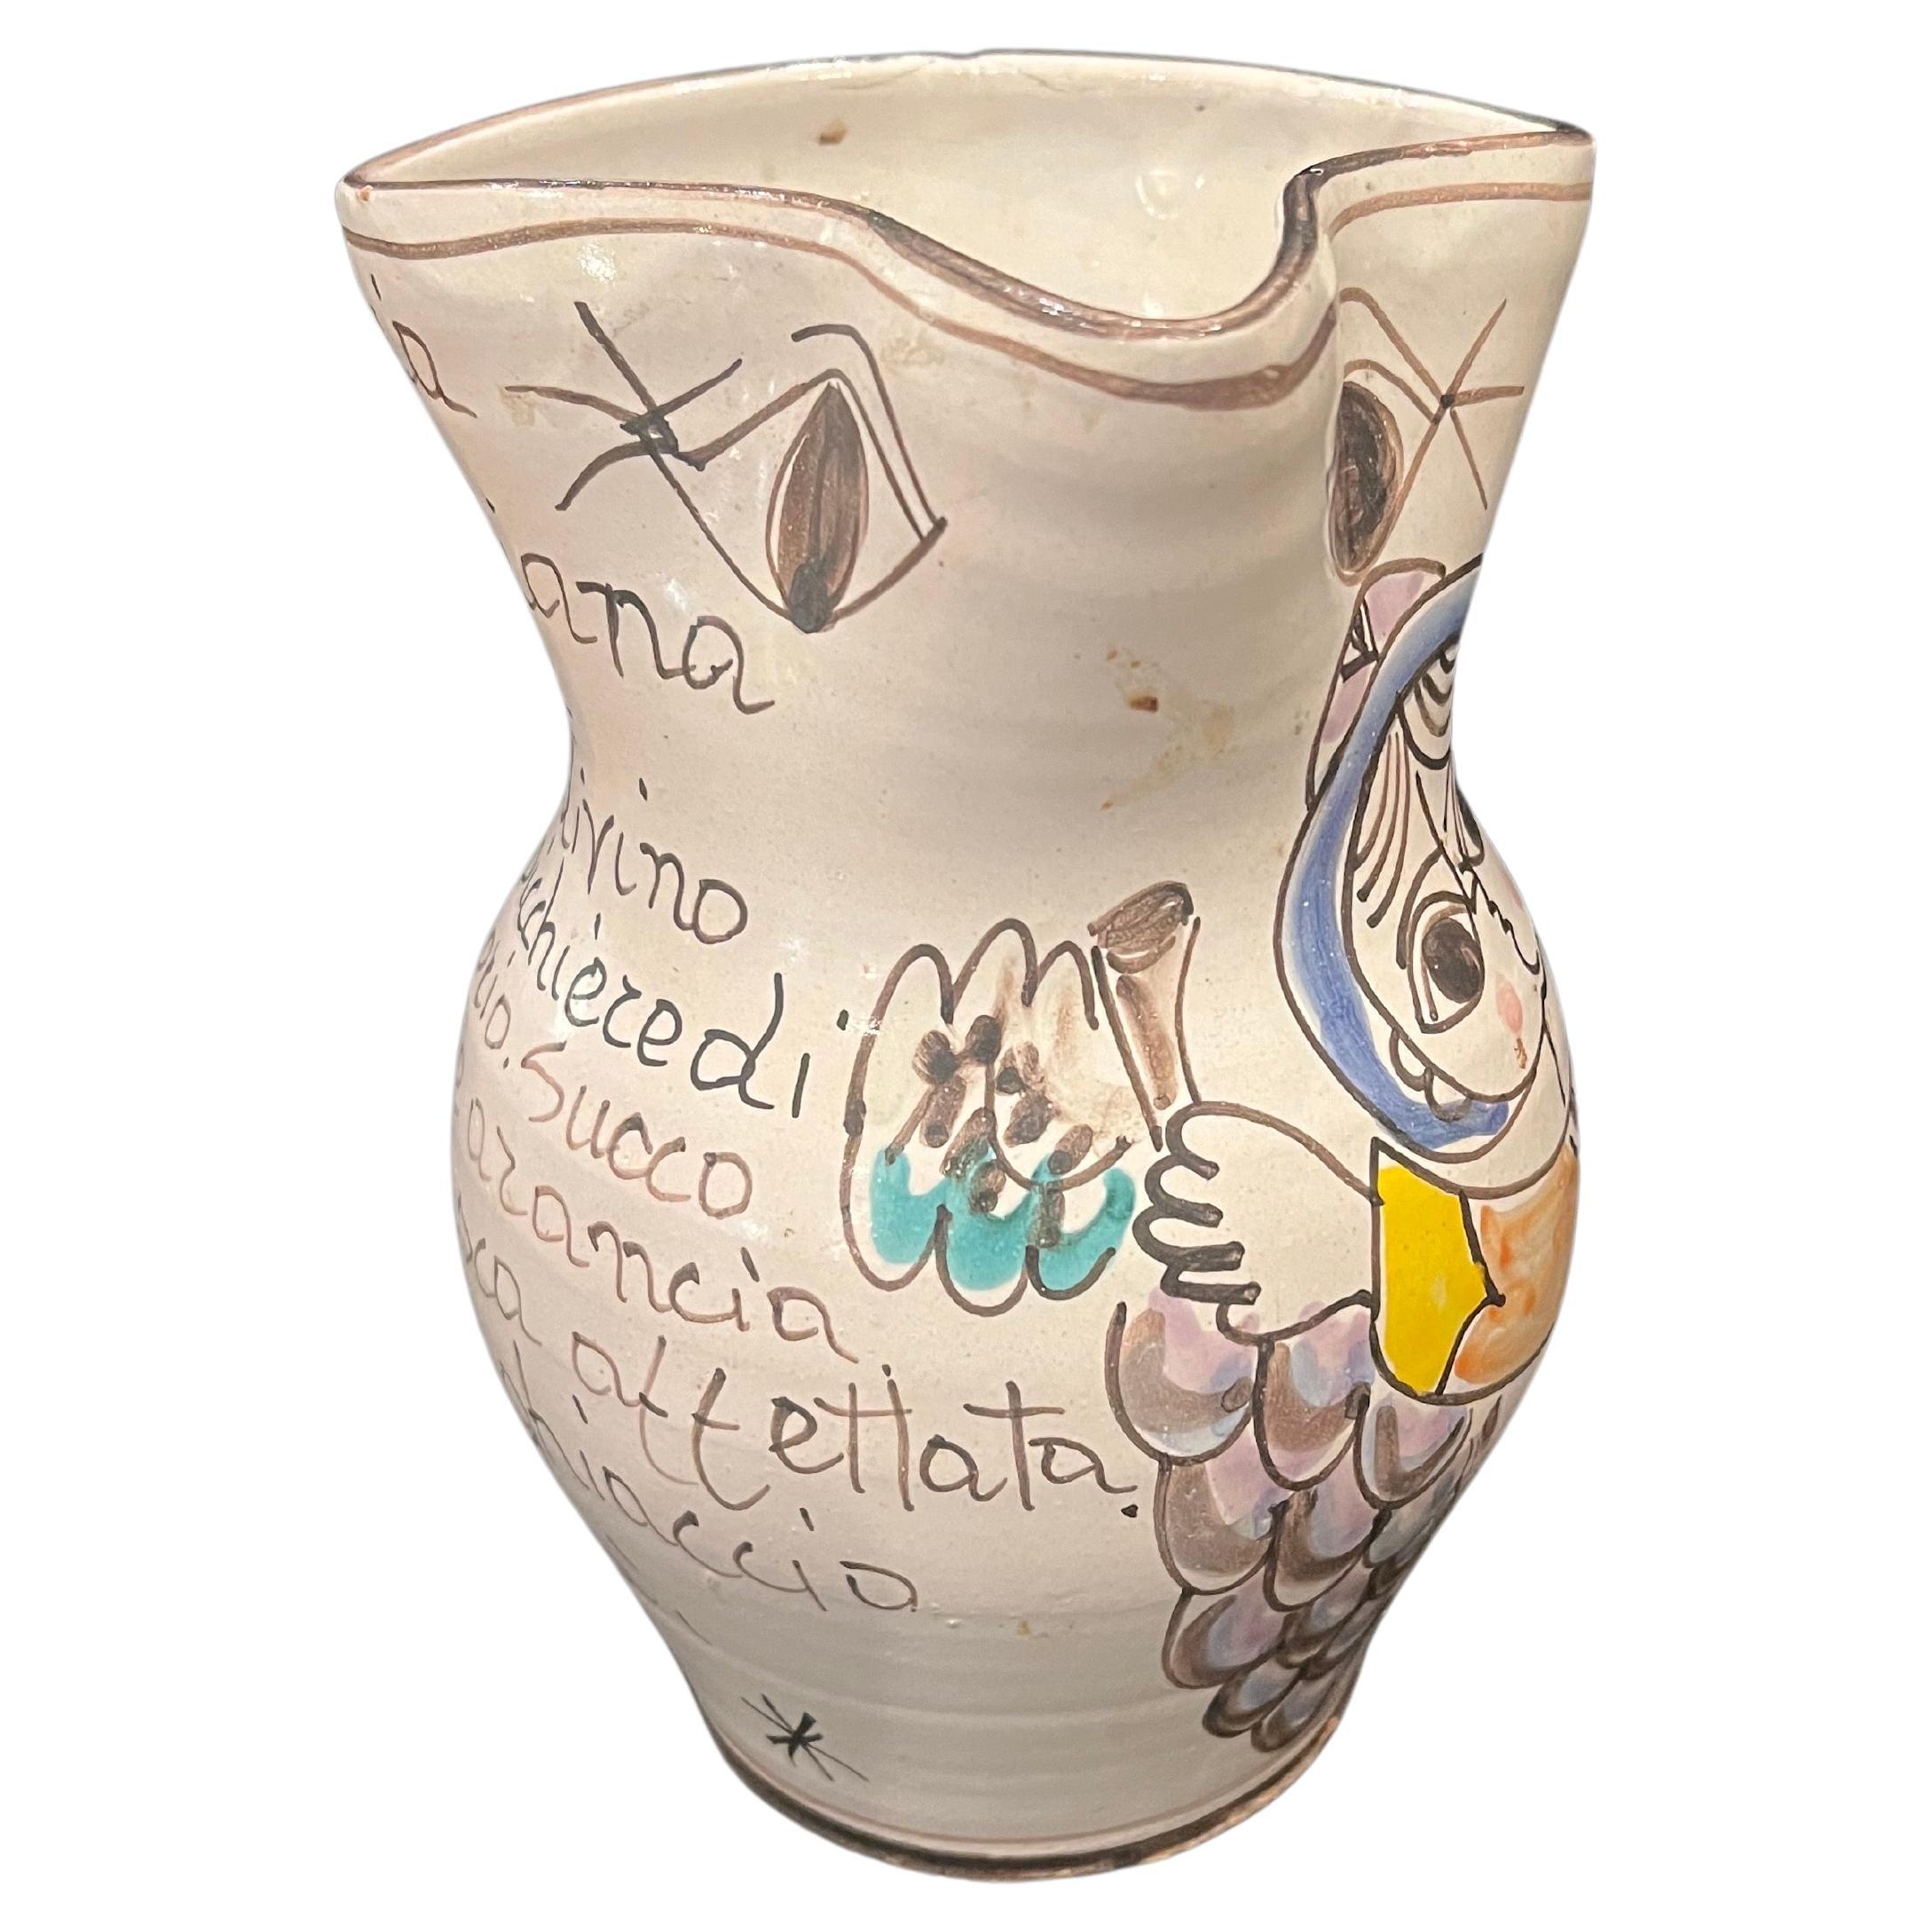 Hand-Painted Ceramic Water RareJug by Giovanni Desimone With Sangria Recipe 1